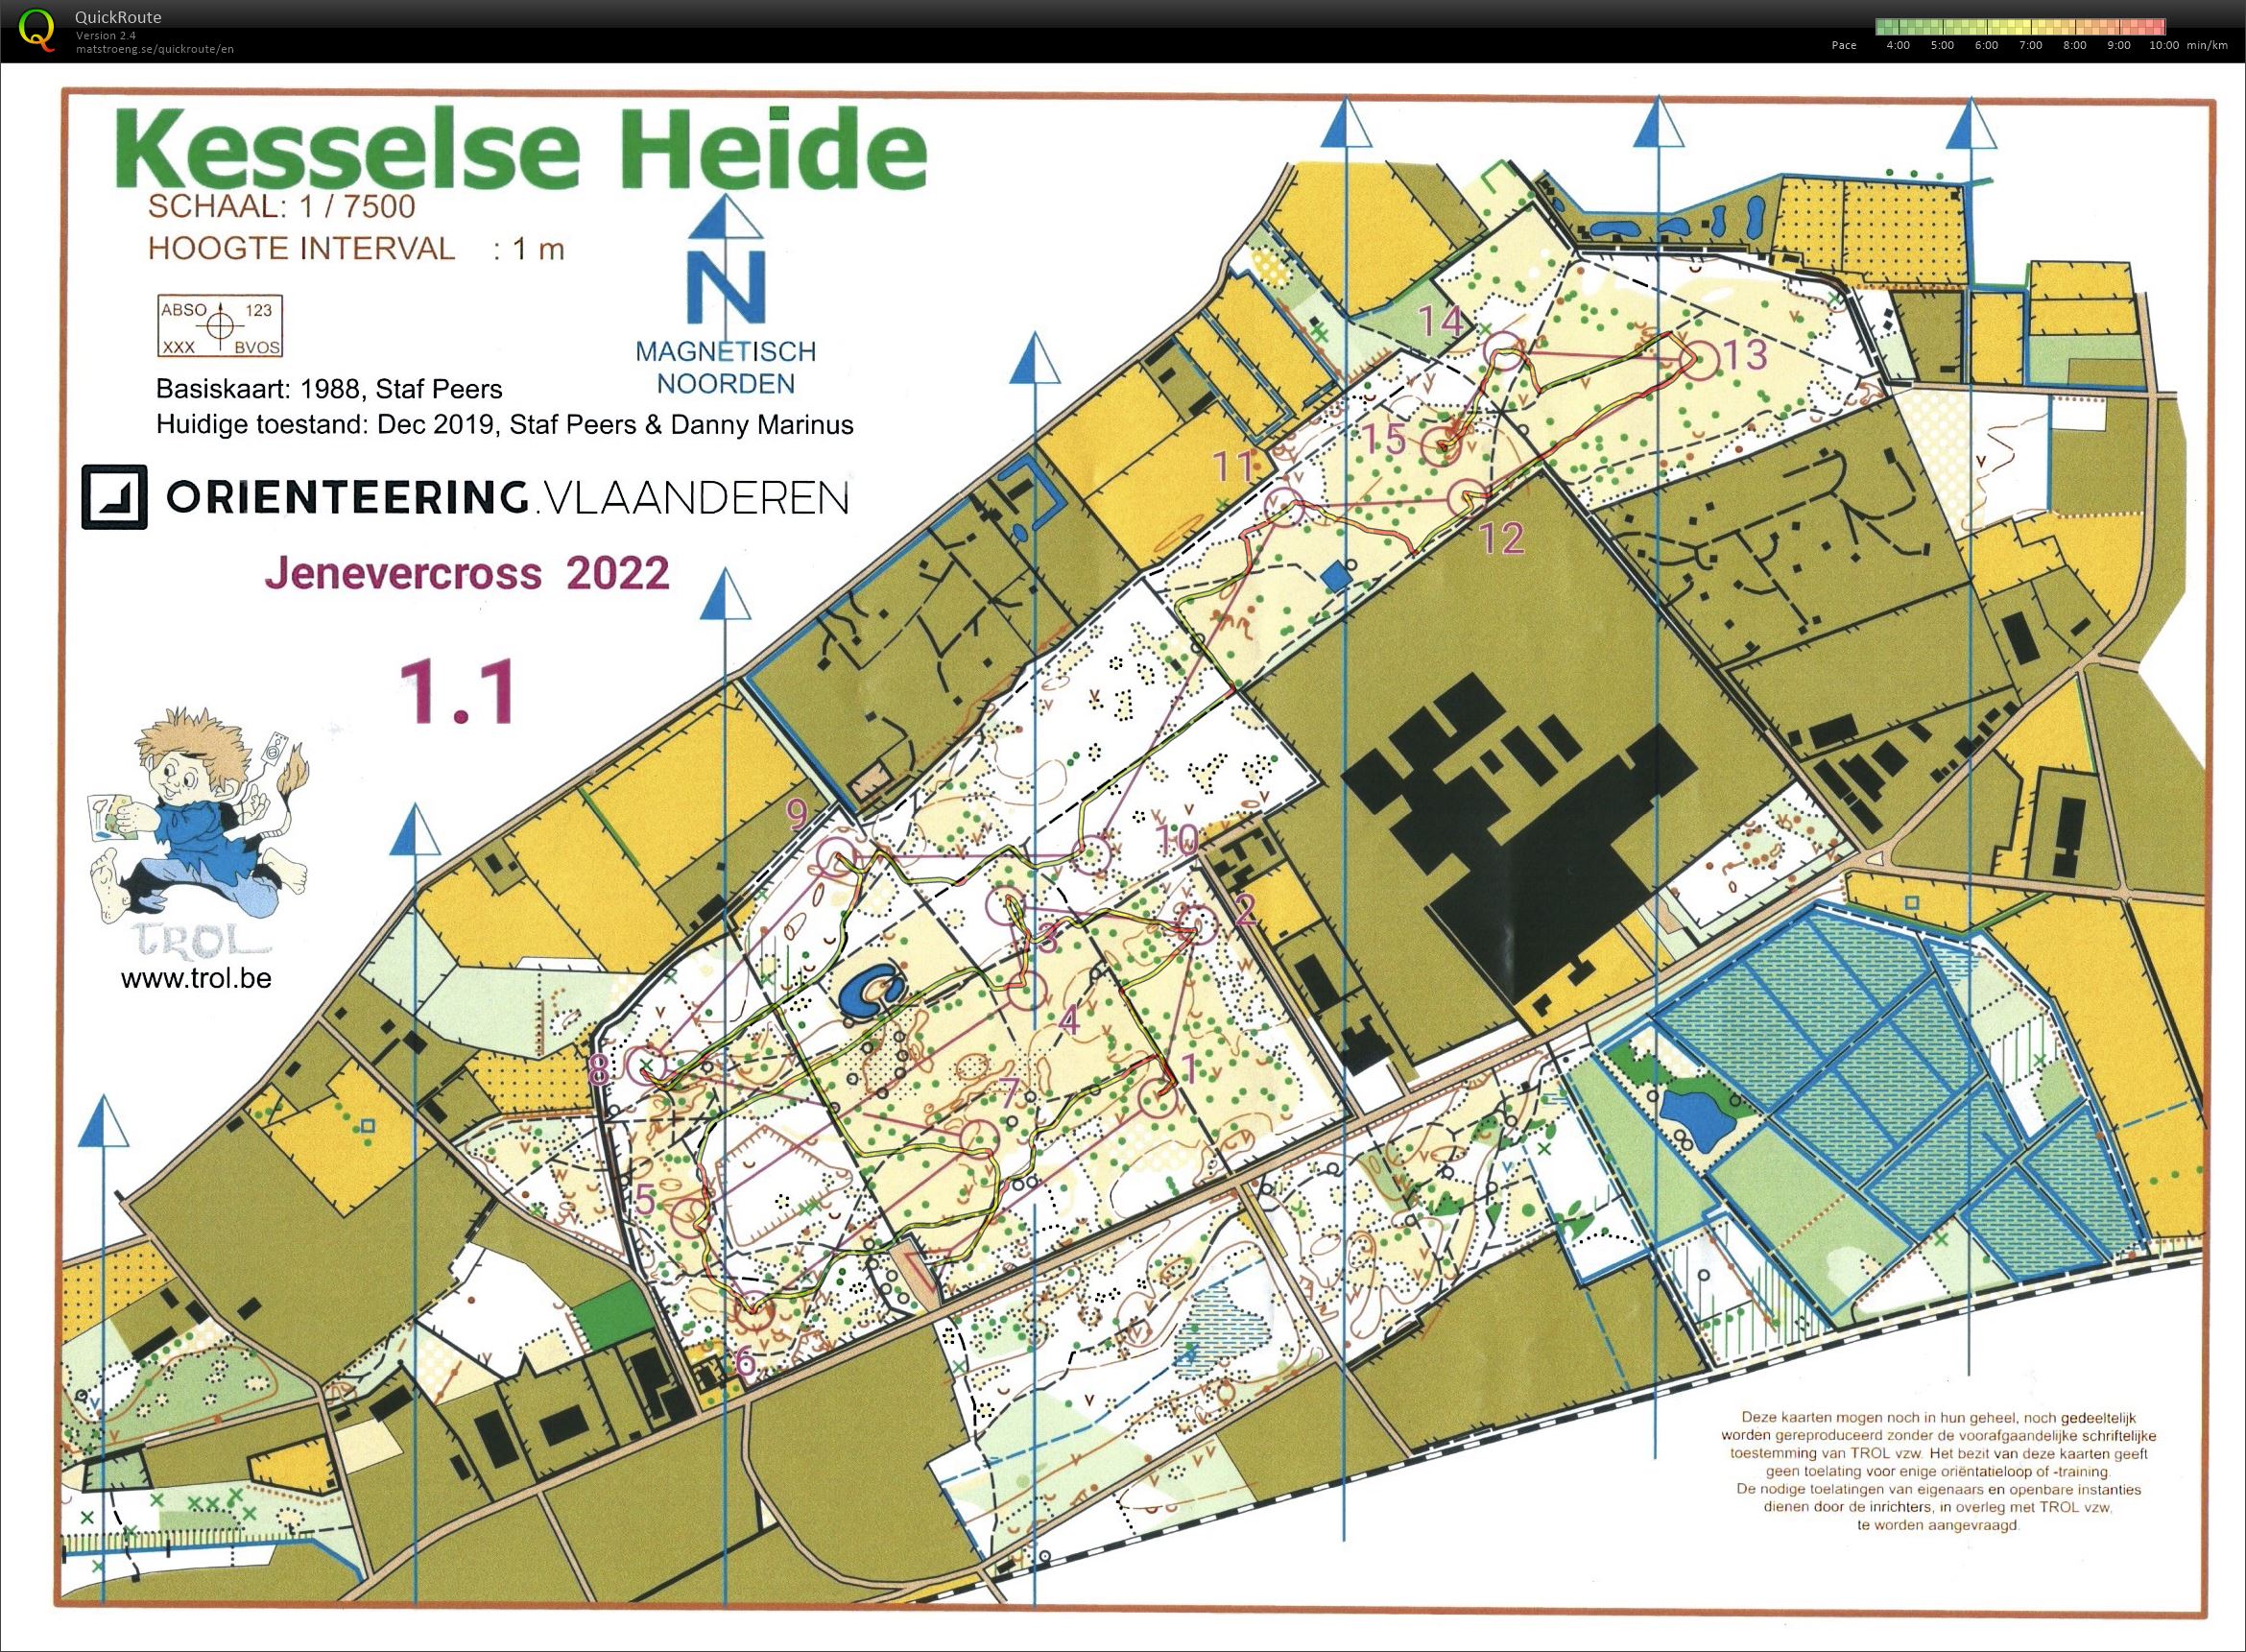 Jenevercross 2022 - Kesselse Heide - 1.1 (07/01/2022)